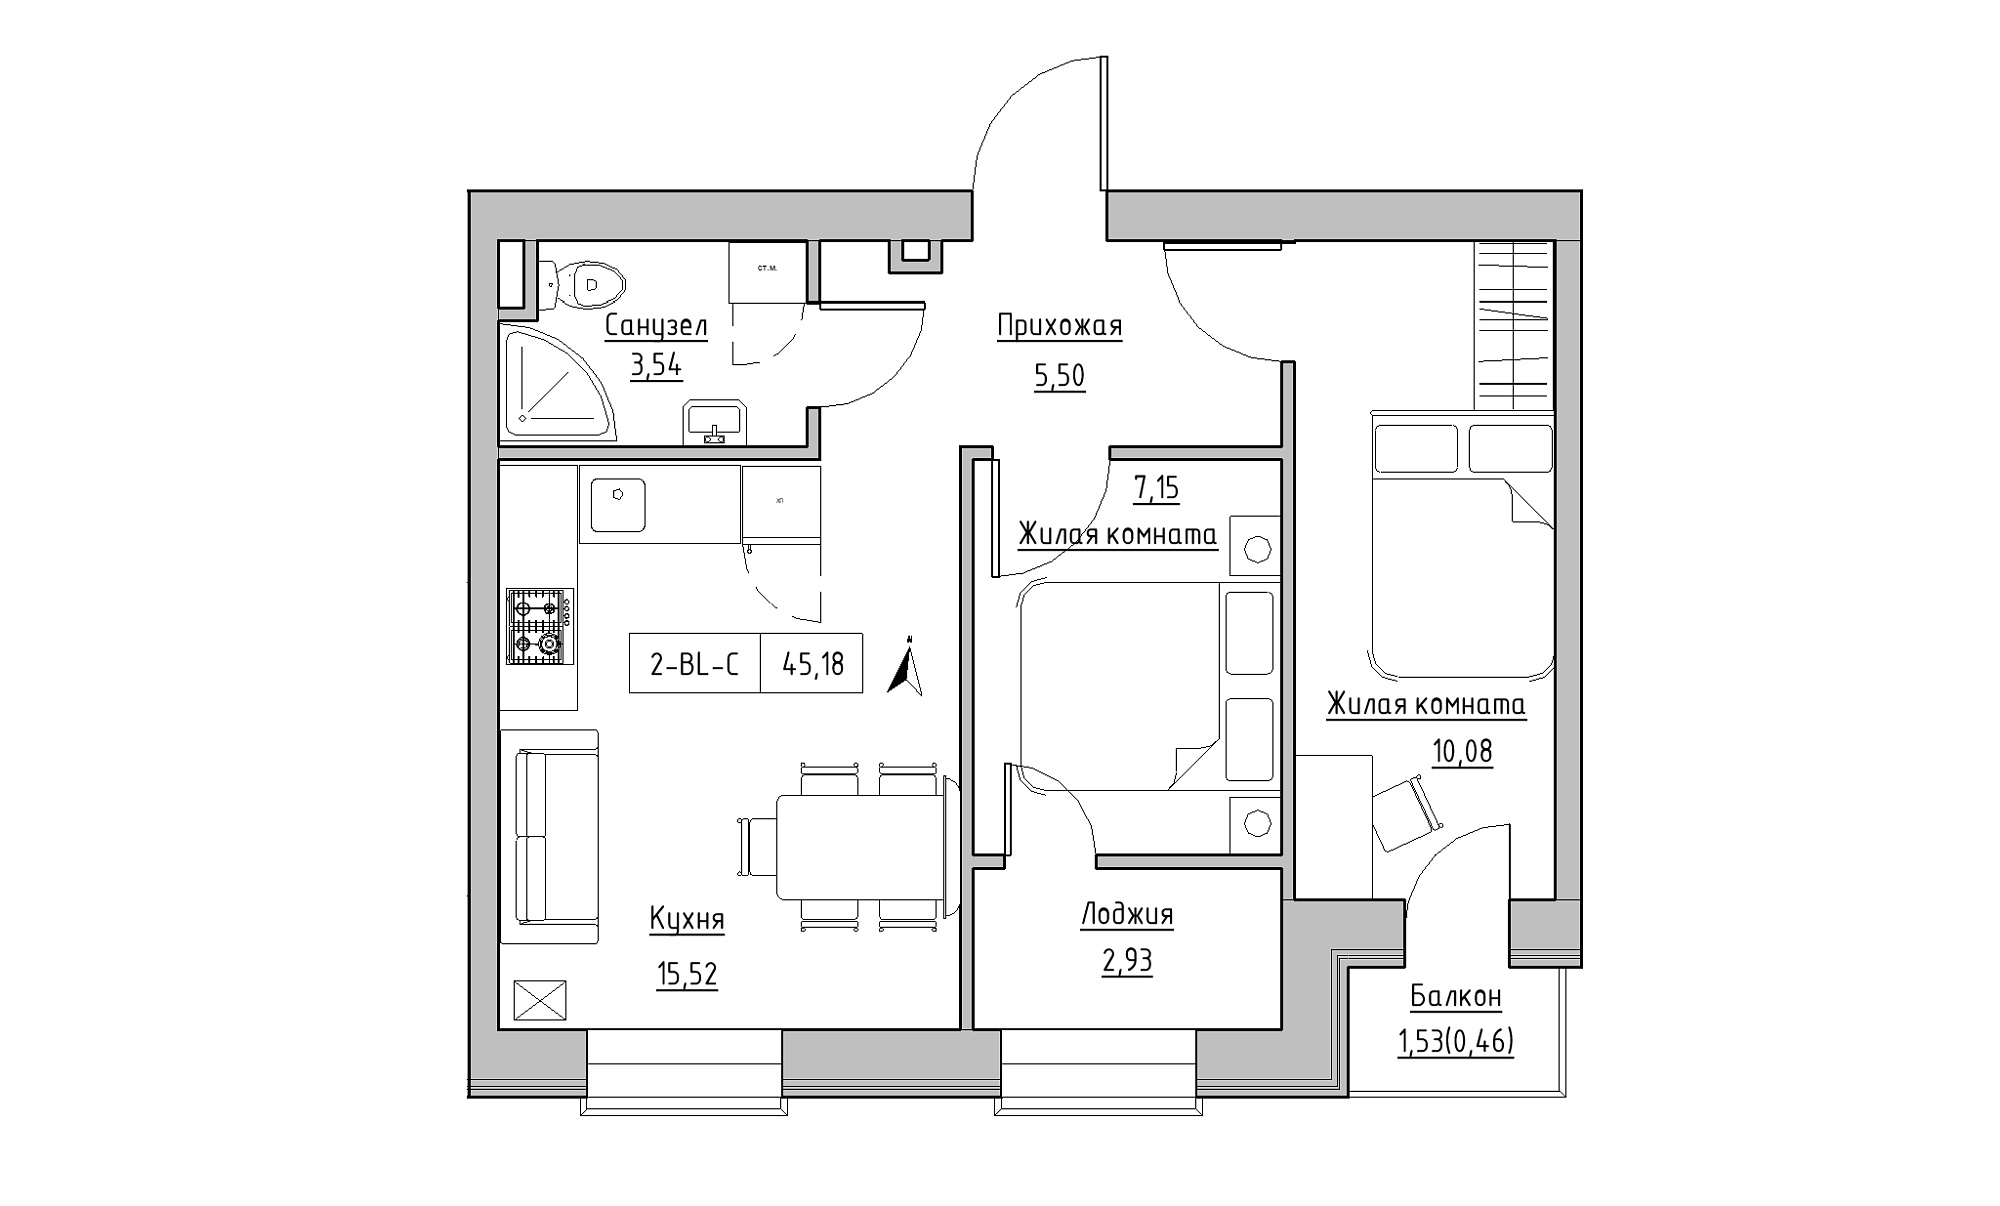 Planning 2-rm flats area 45.18m2, KS-023-04/0009.